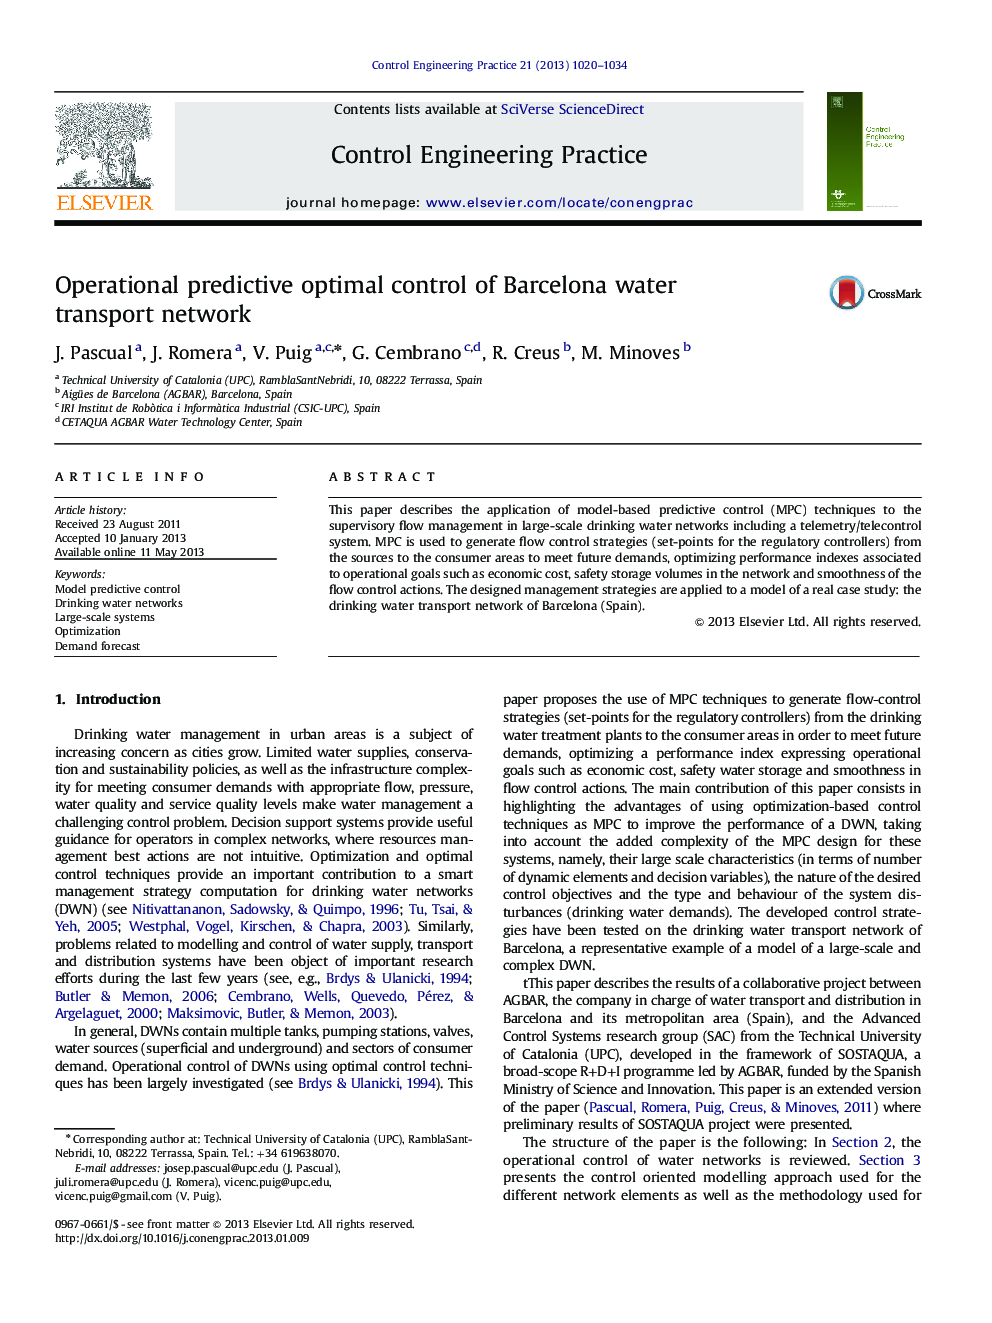 Operational predictive optimal control of Barcelona water transport network